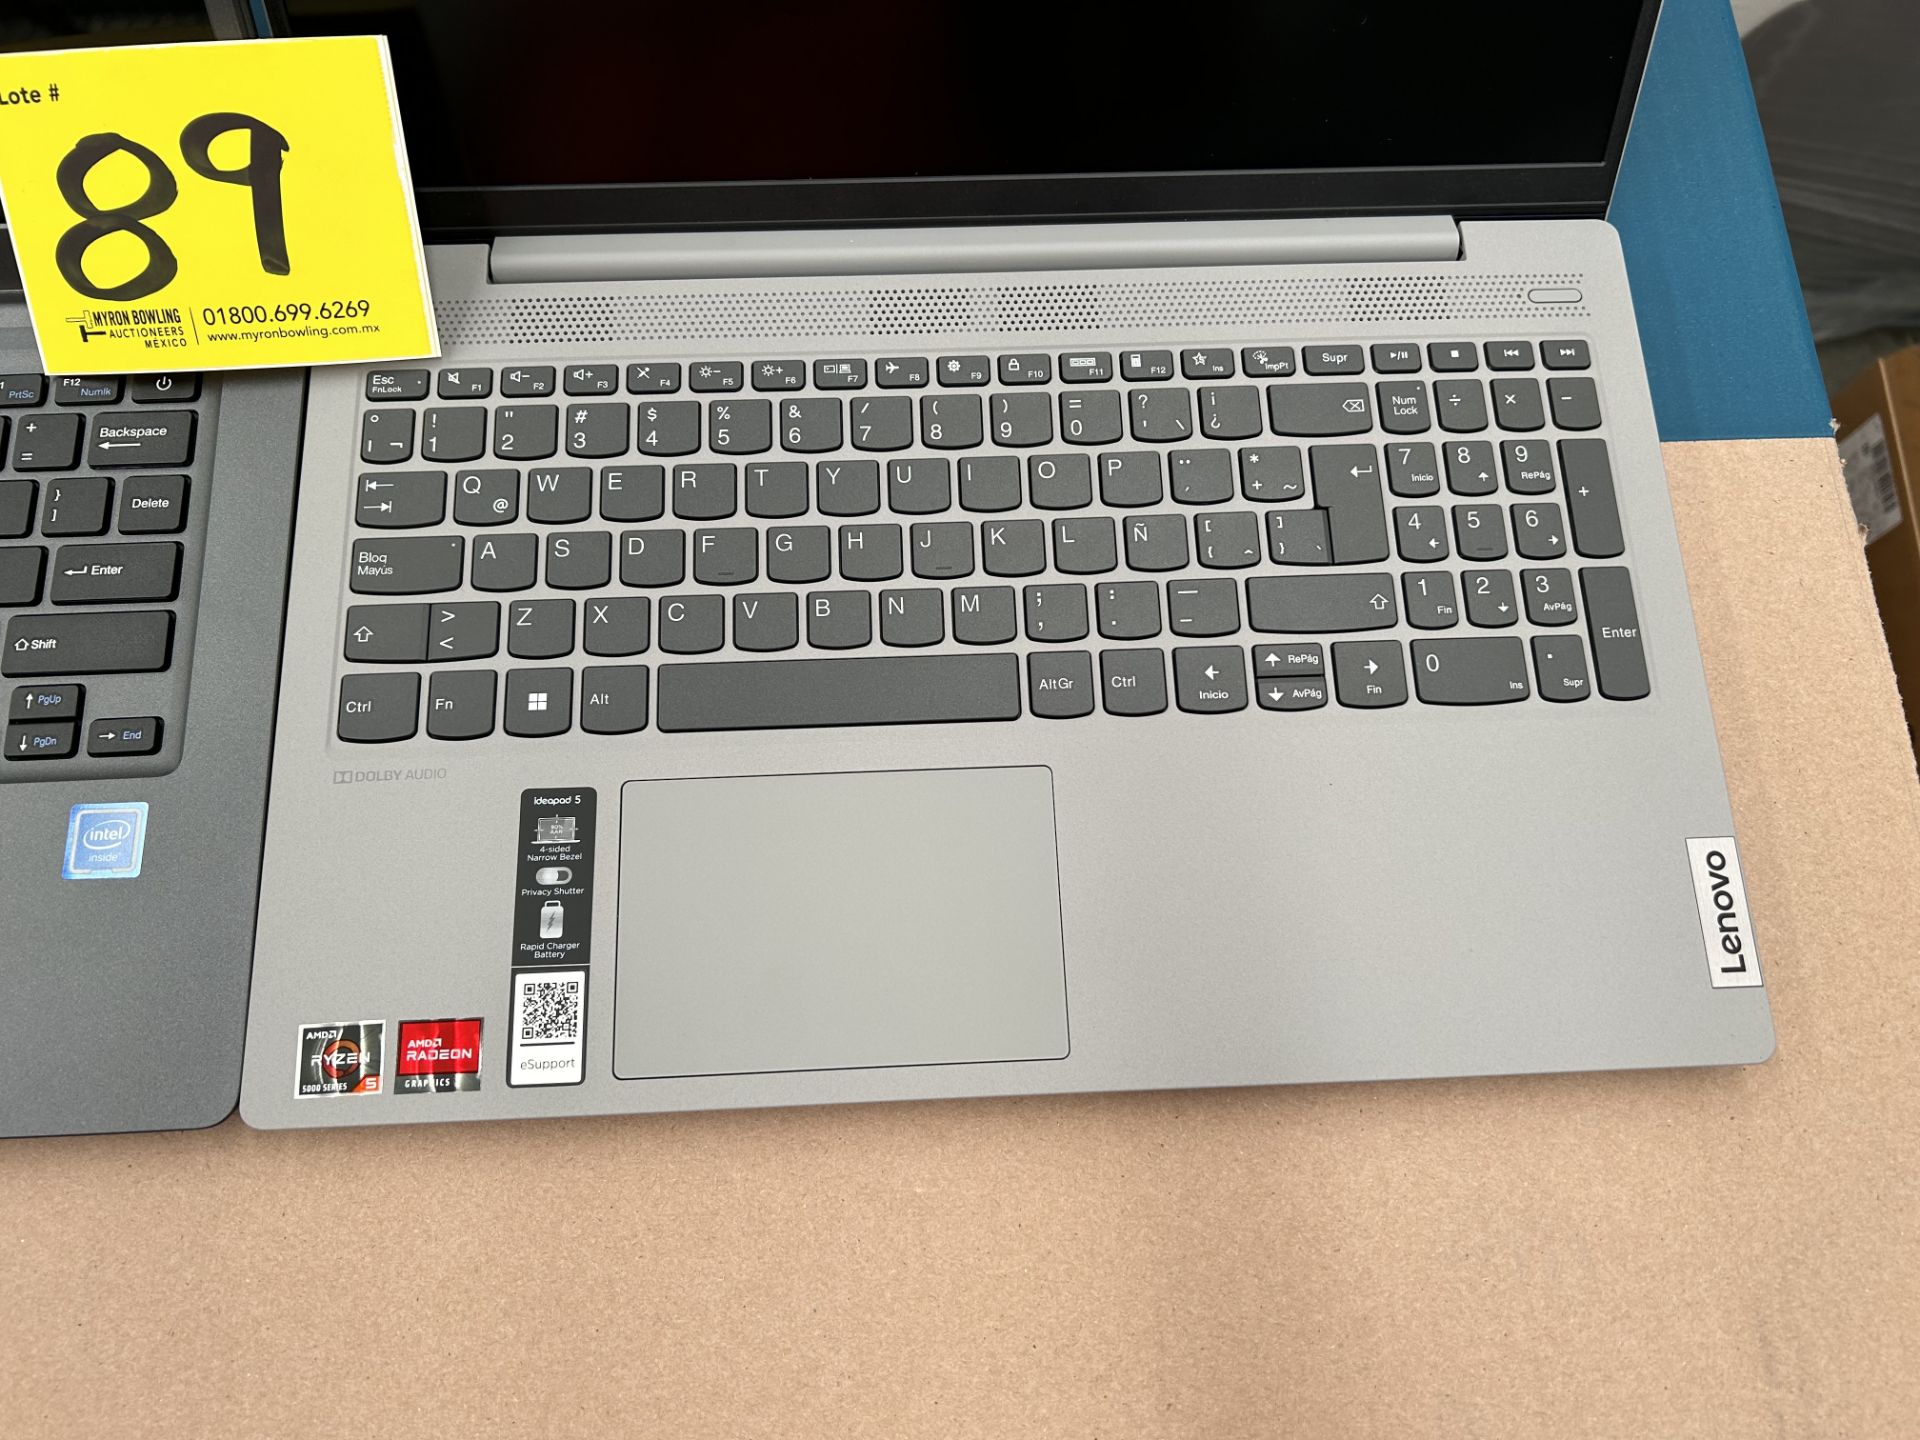 Lote de 4 laptops contiene: 1 Laptop Marca LENOVO, Modelo IDEA PAD 5, Serie spf3tdm9j, almacenamien - Image 11 of 18